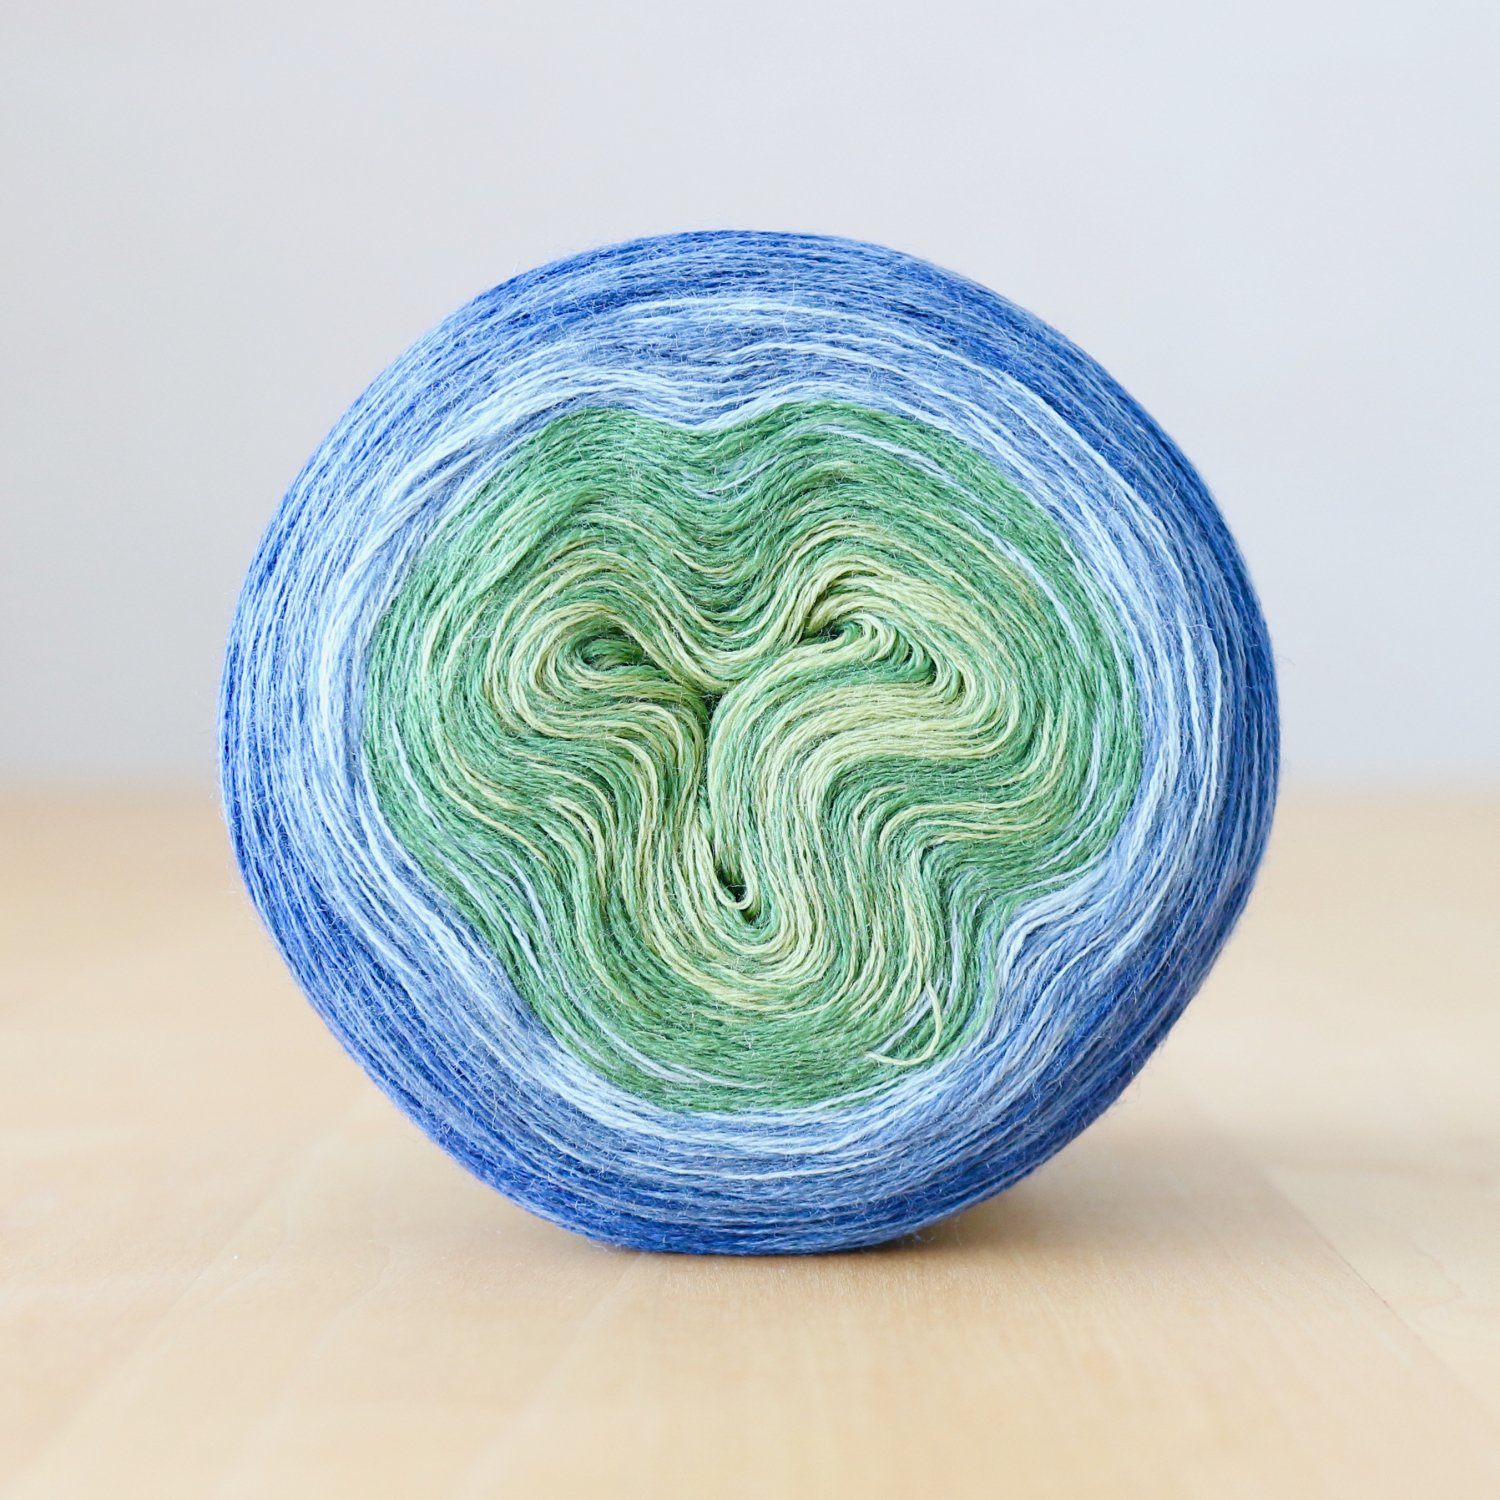 Jolly knits<br>Gradient Yarn Merino 3PLY1000m<br>BLUE HORTENSIA